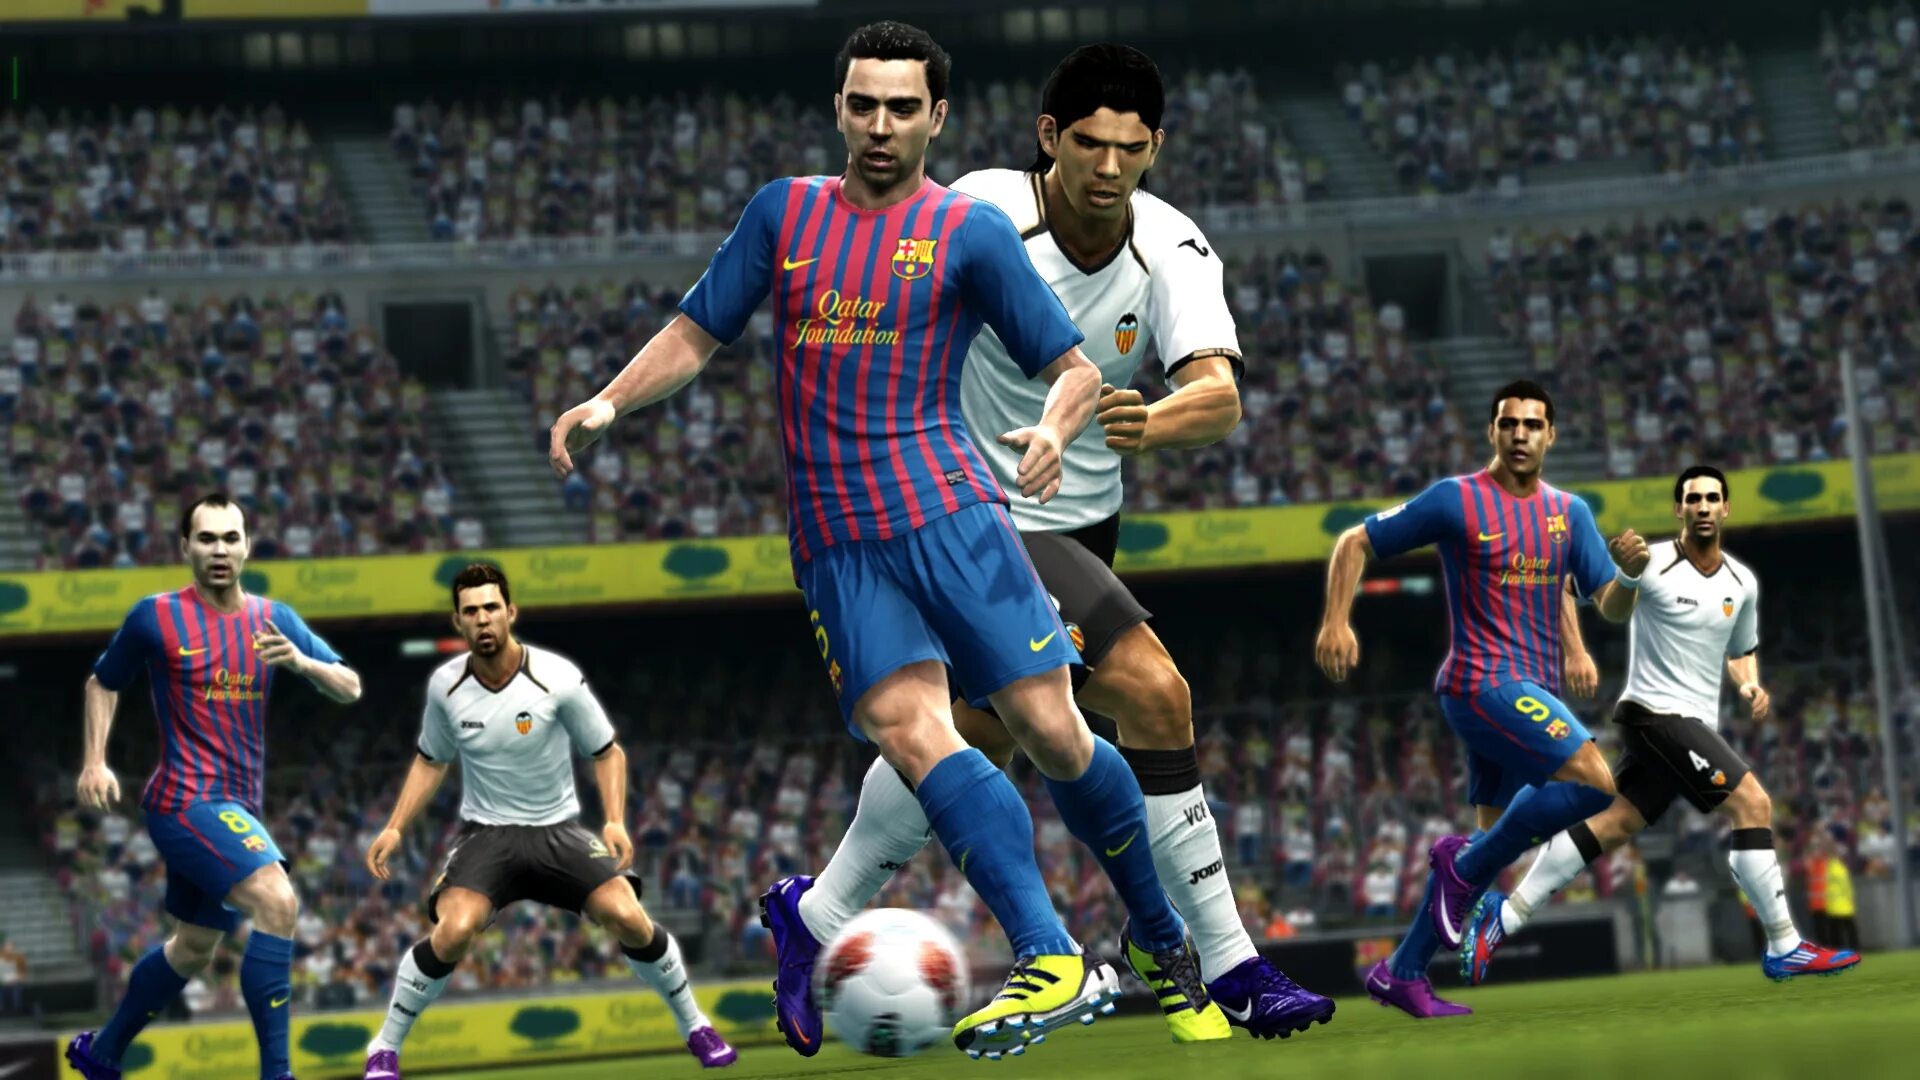 Pro Evolution Soccer 2013 ps3. PES 2013 ПС. Pro Evolution Soccer 2013 Xbox 360. PLAYSTATION 3 игры PES 2013. Игр футбол 2013